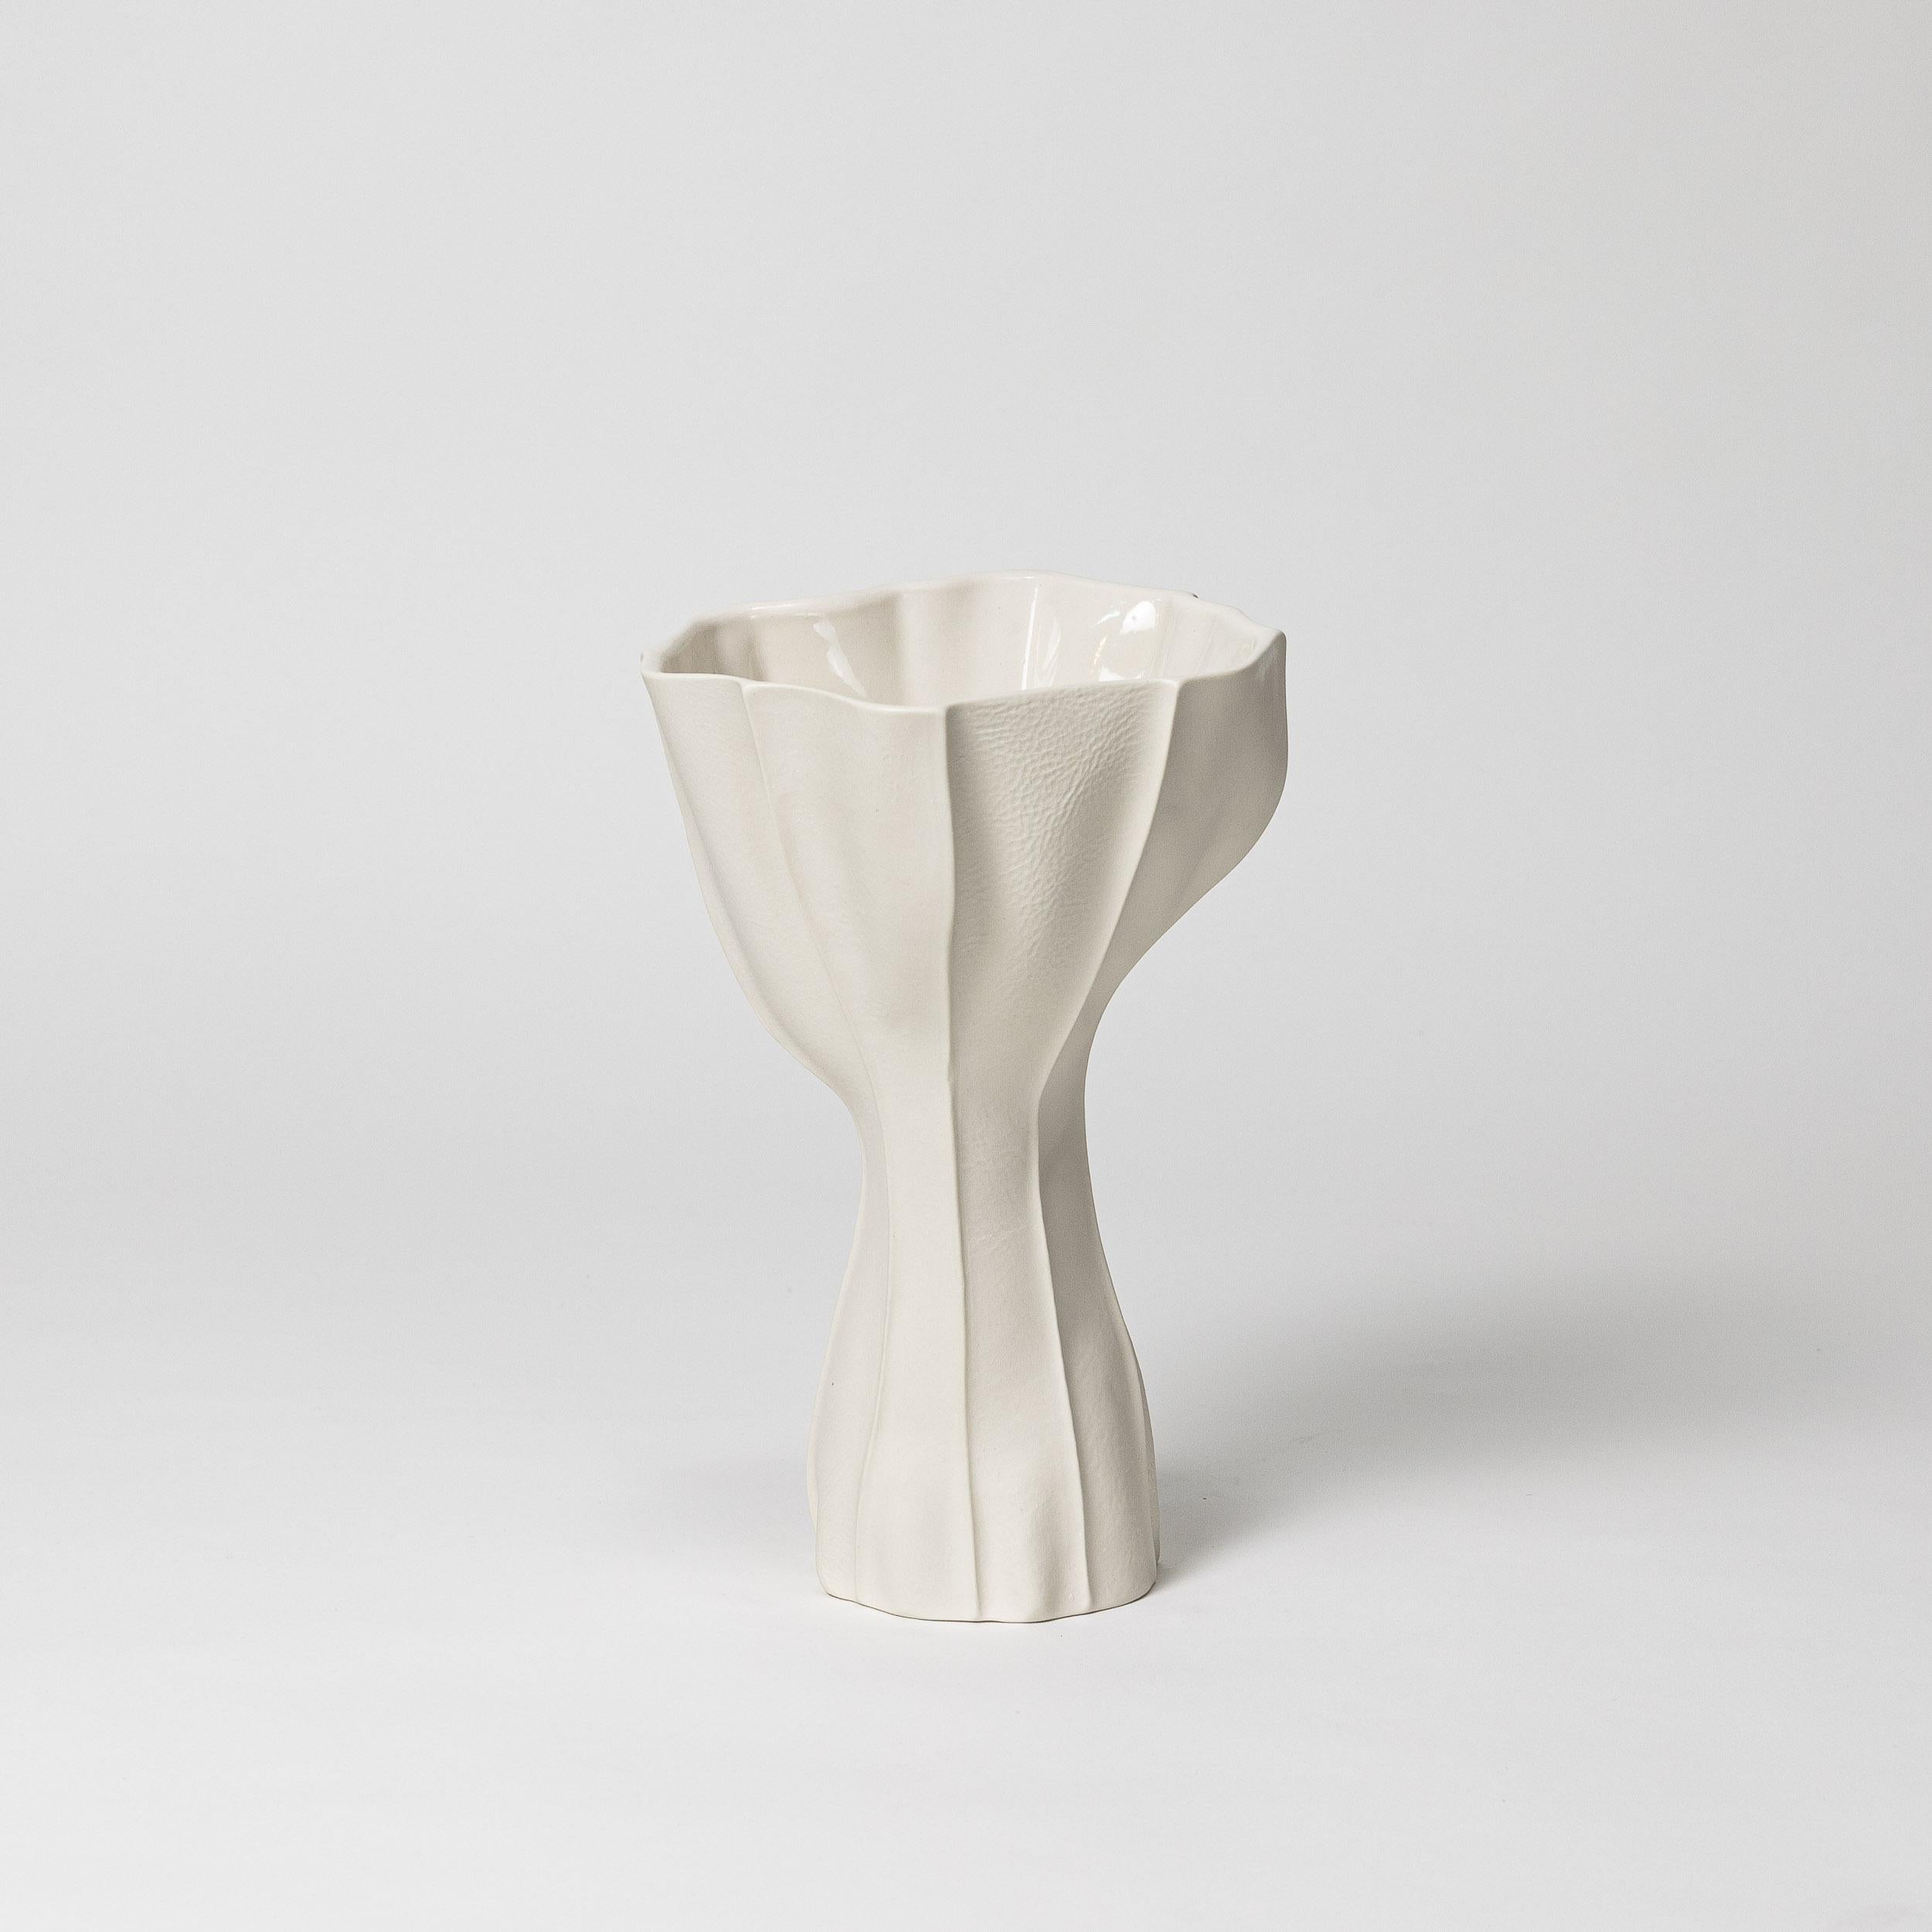 Autre En stock, Organic Ceramic Kawa Vase 9.1, White, Textured, Sculptural, Porcelain  en vente